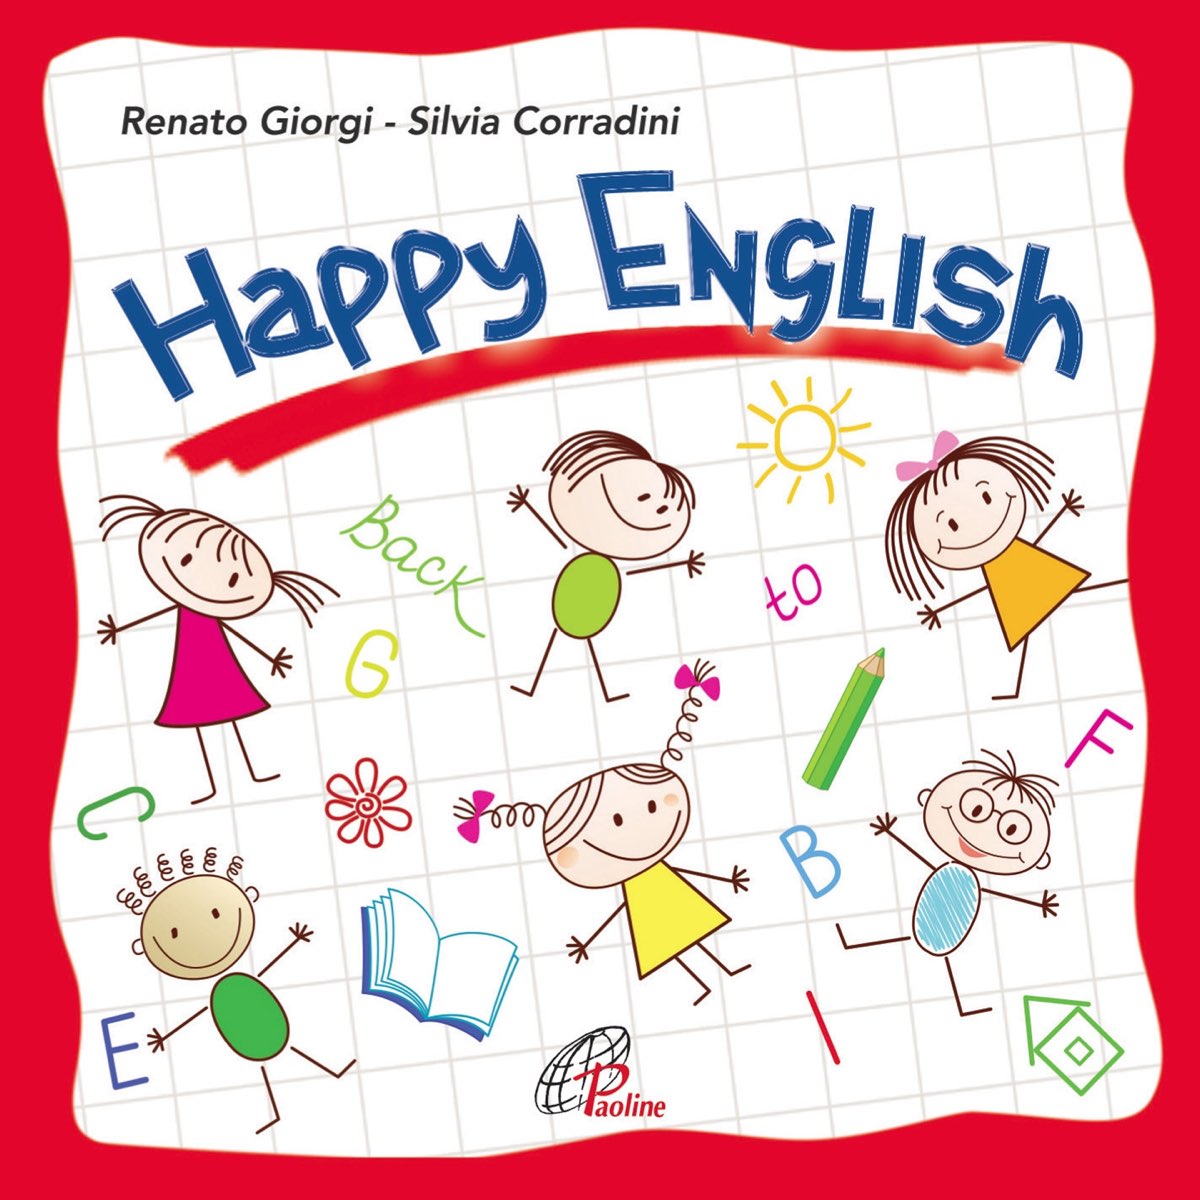 Your happy english. Happy English. Английский язык для детей. Счастливый английский. Кружок английского языка.